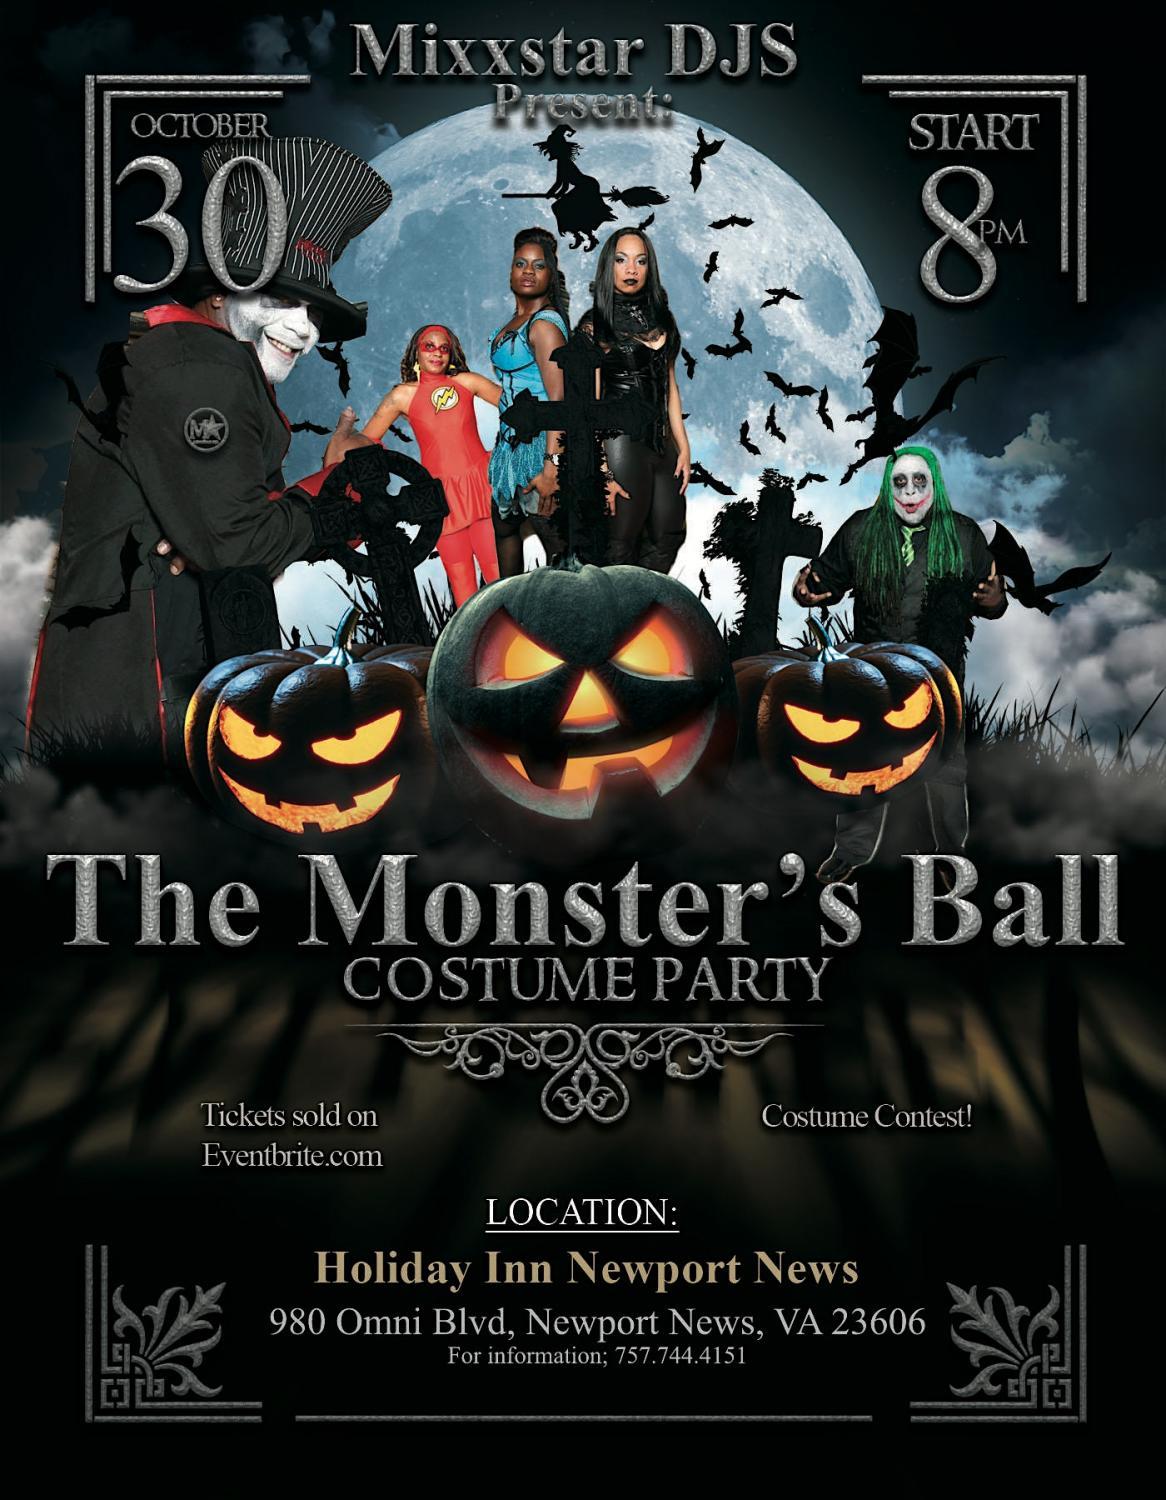 The Monster's Ball in Newport News, VA
Sat Oct 29, 8:30 PM - Sun Oct 30, 1:00 AM
in 9 days